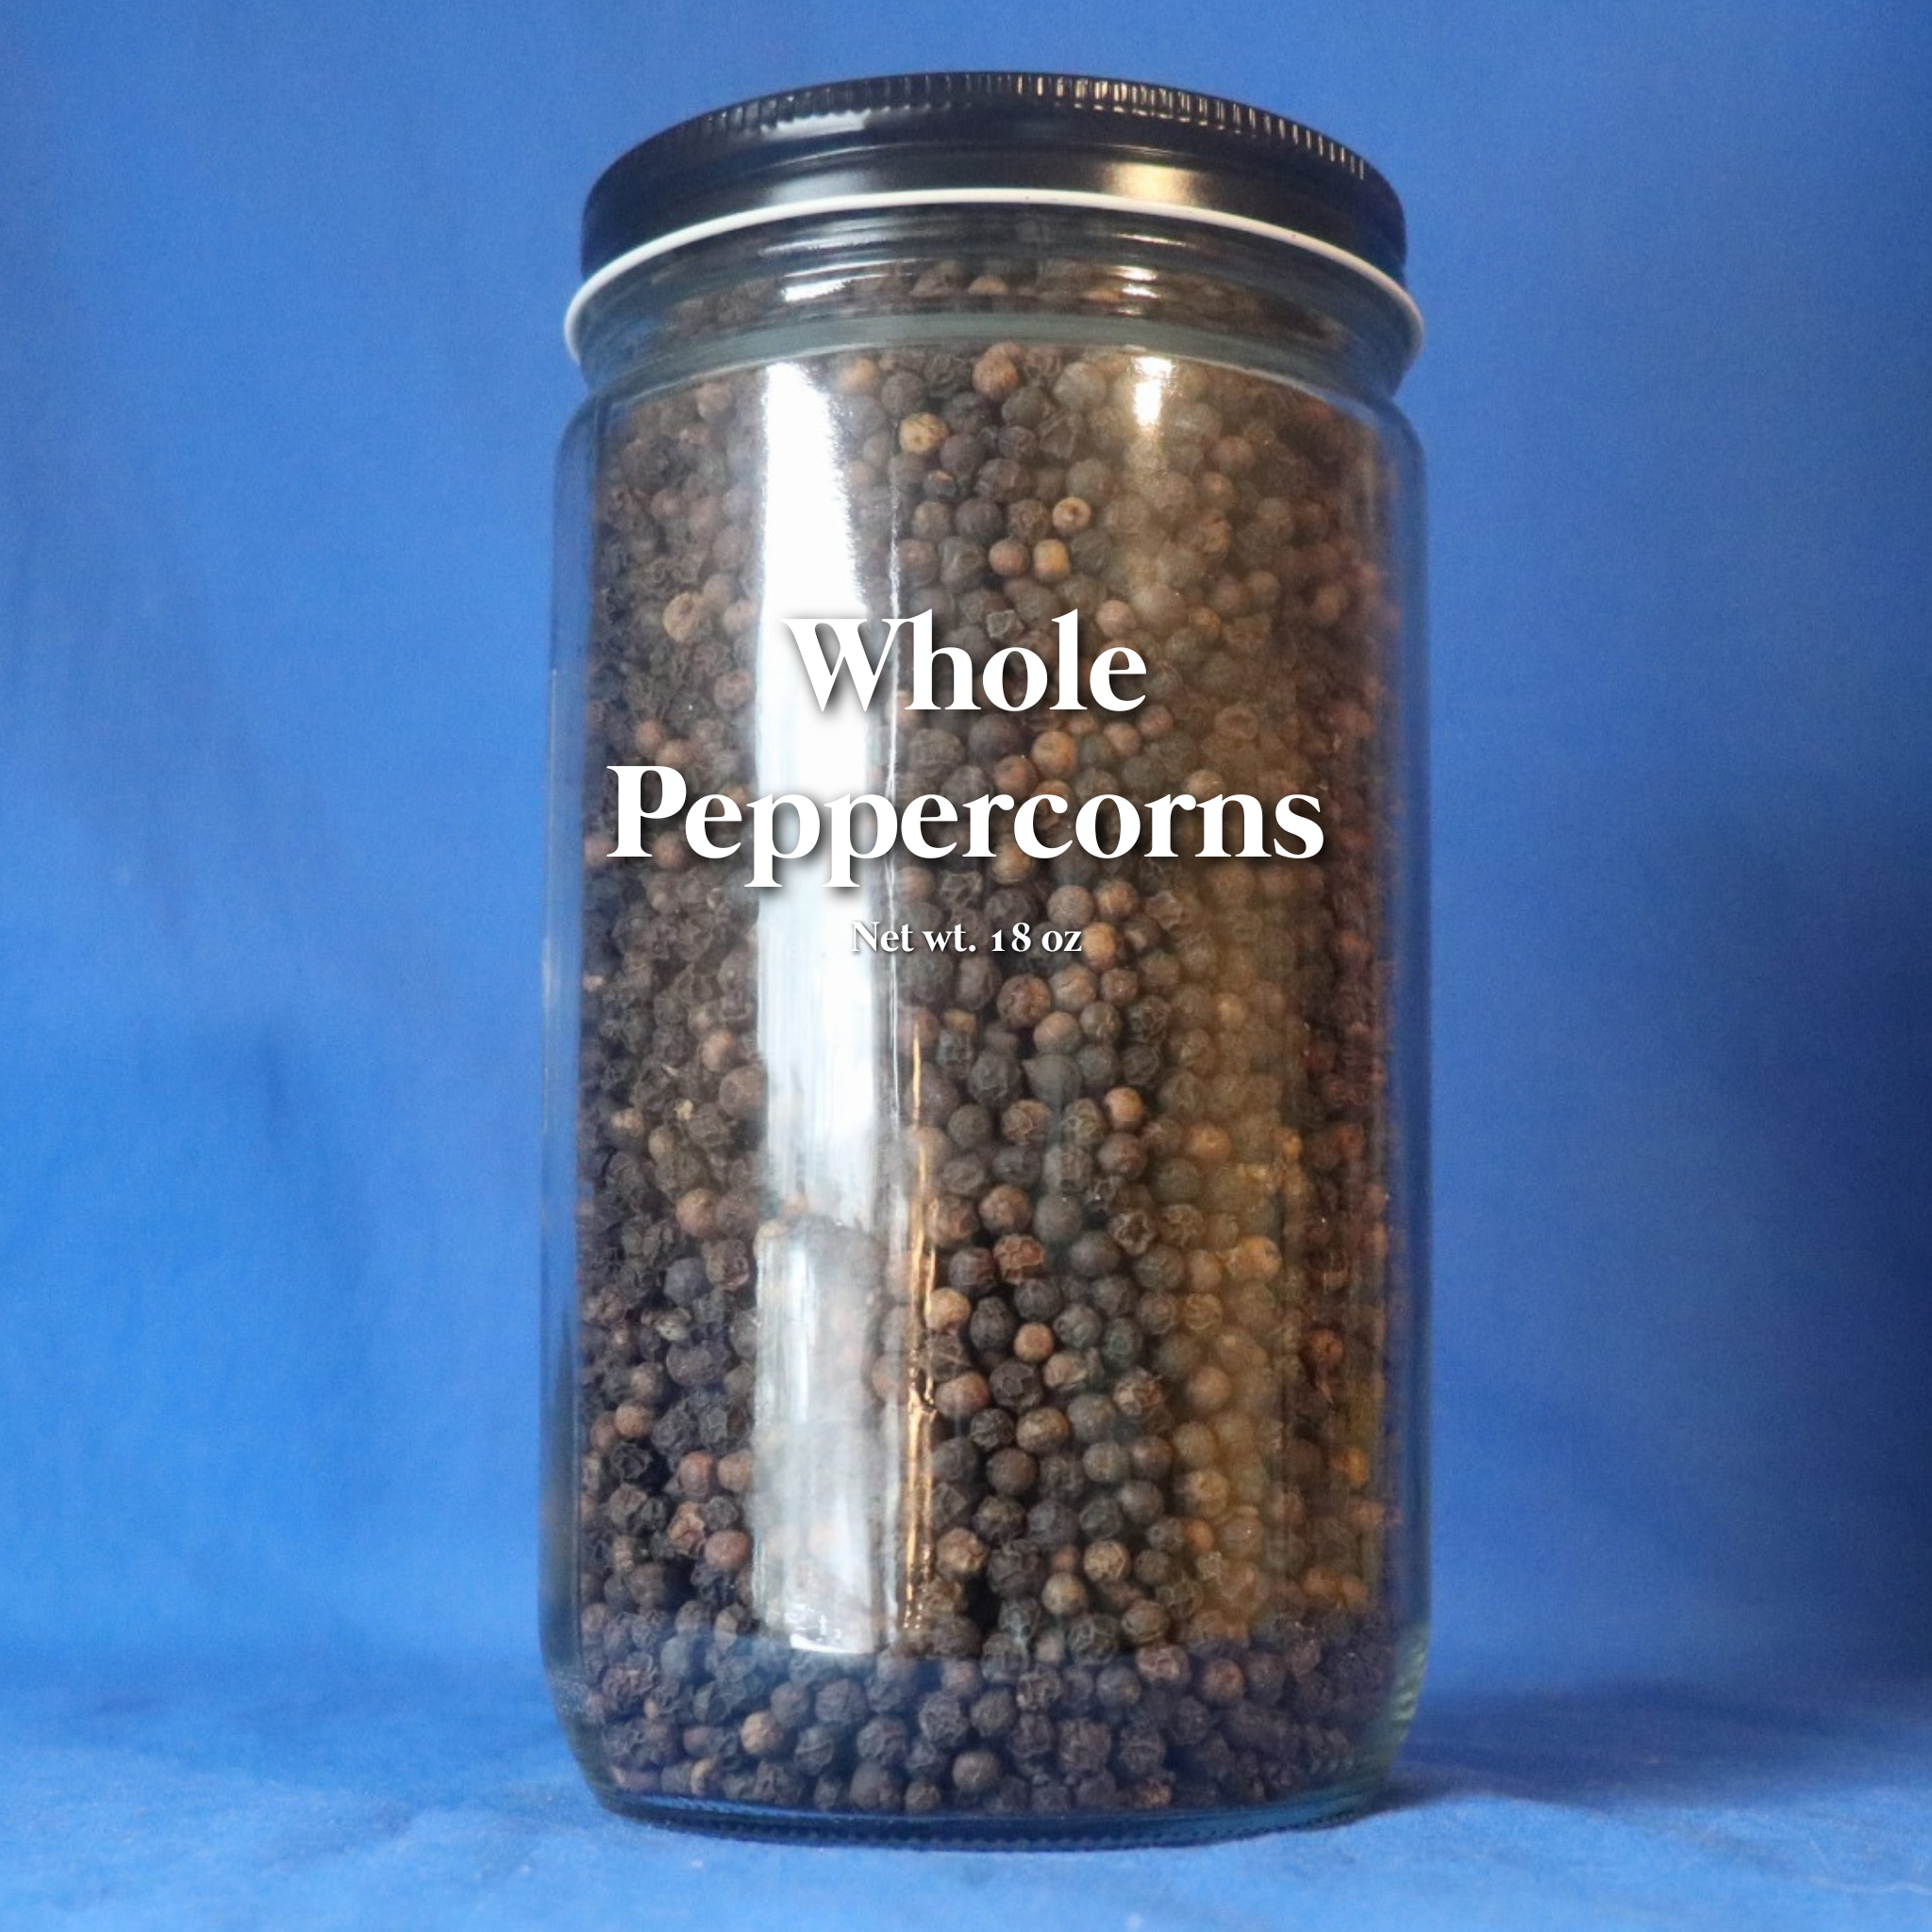 Whole Peppercorns